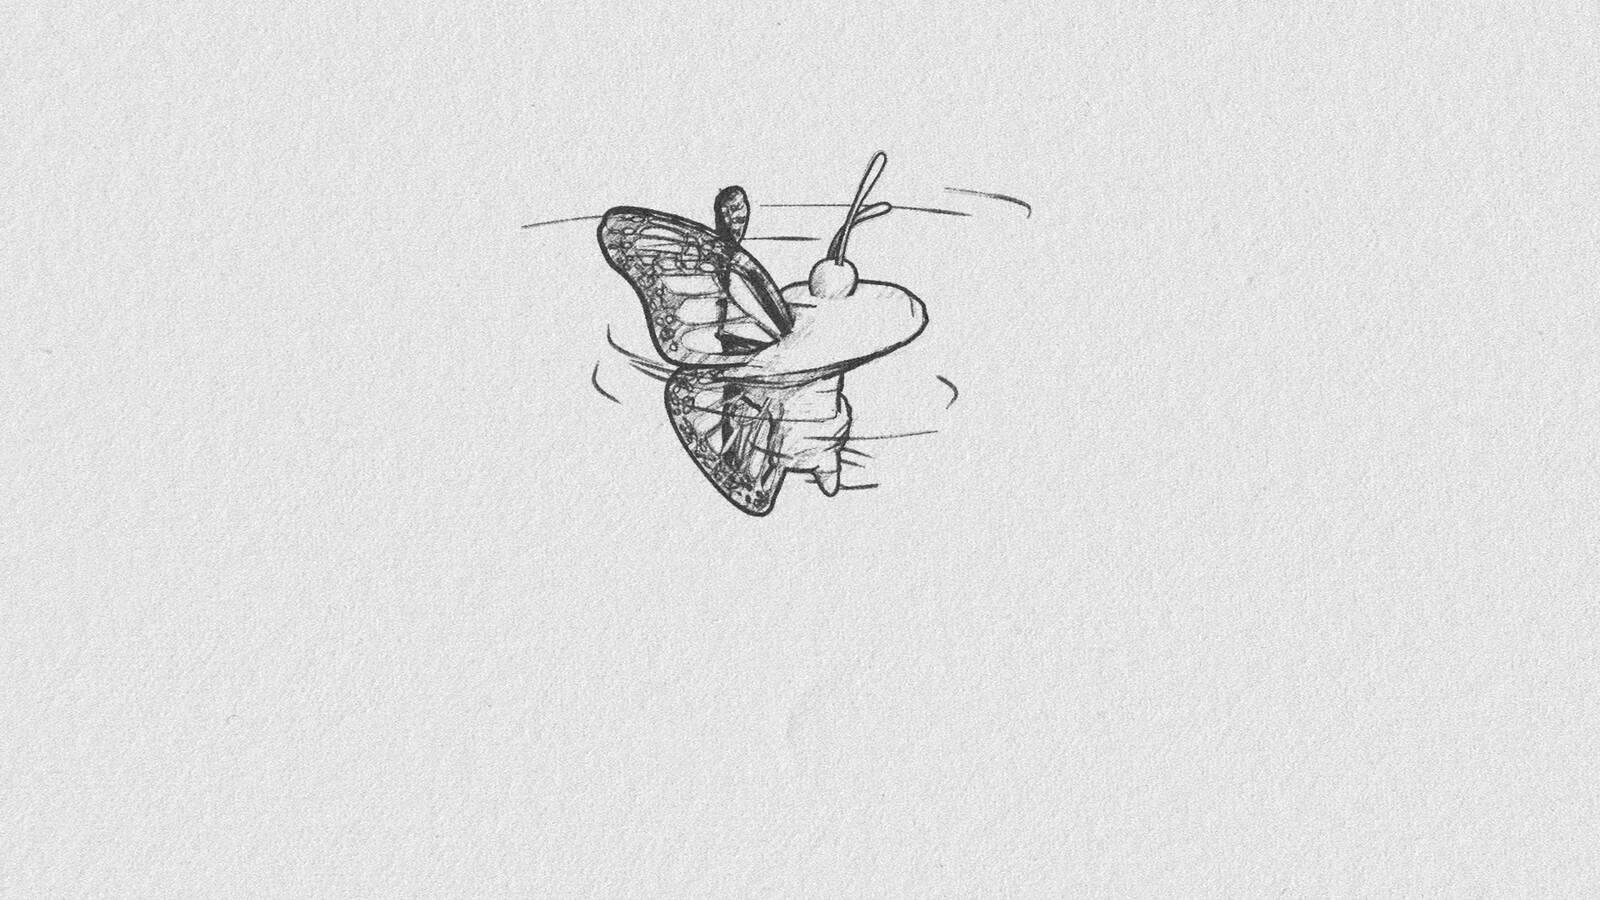 Butterfly Effect - Transformation